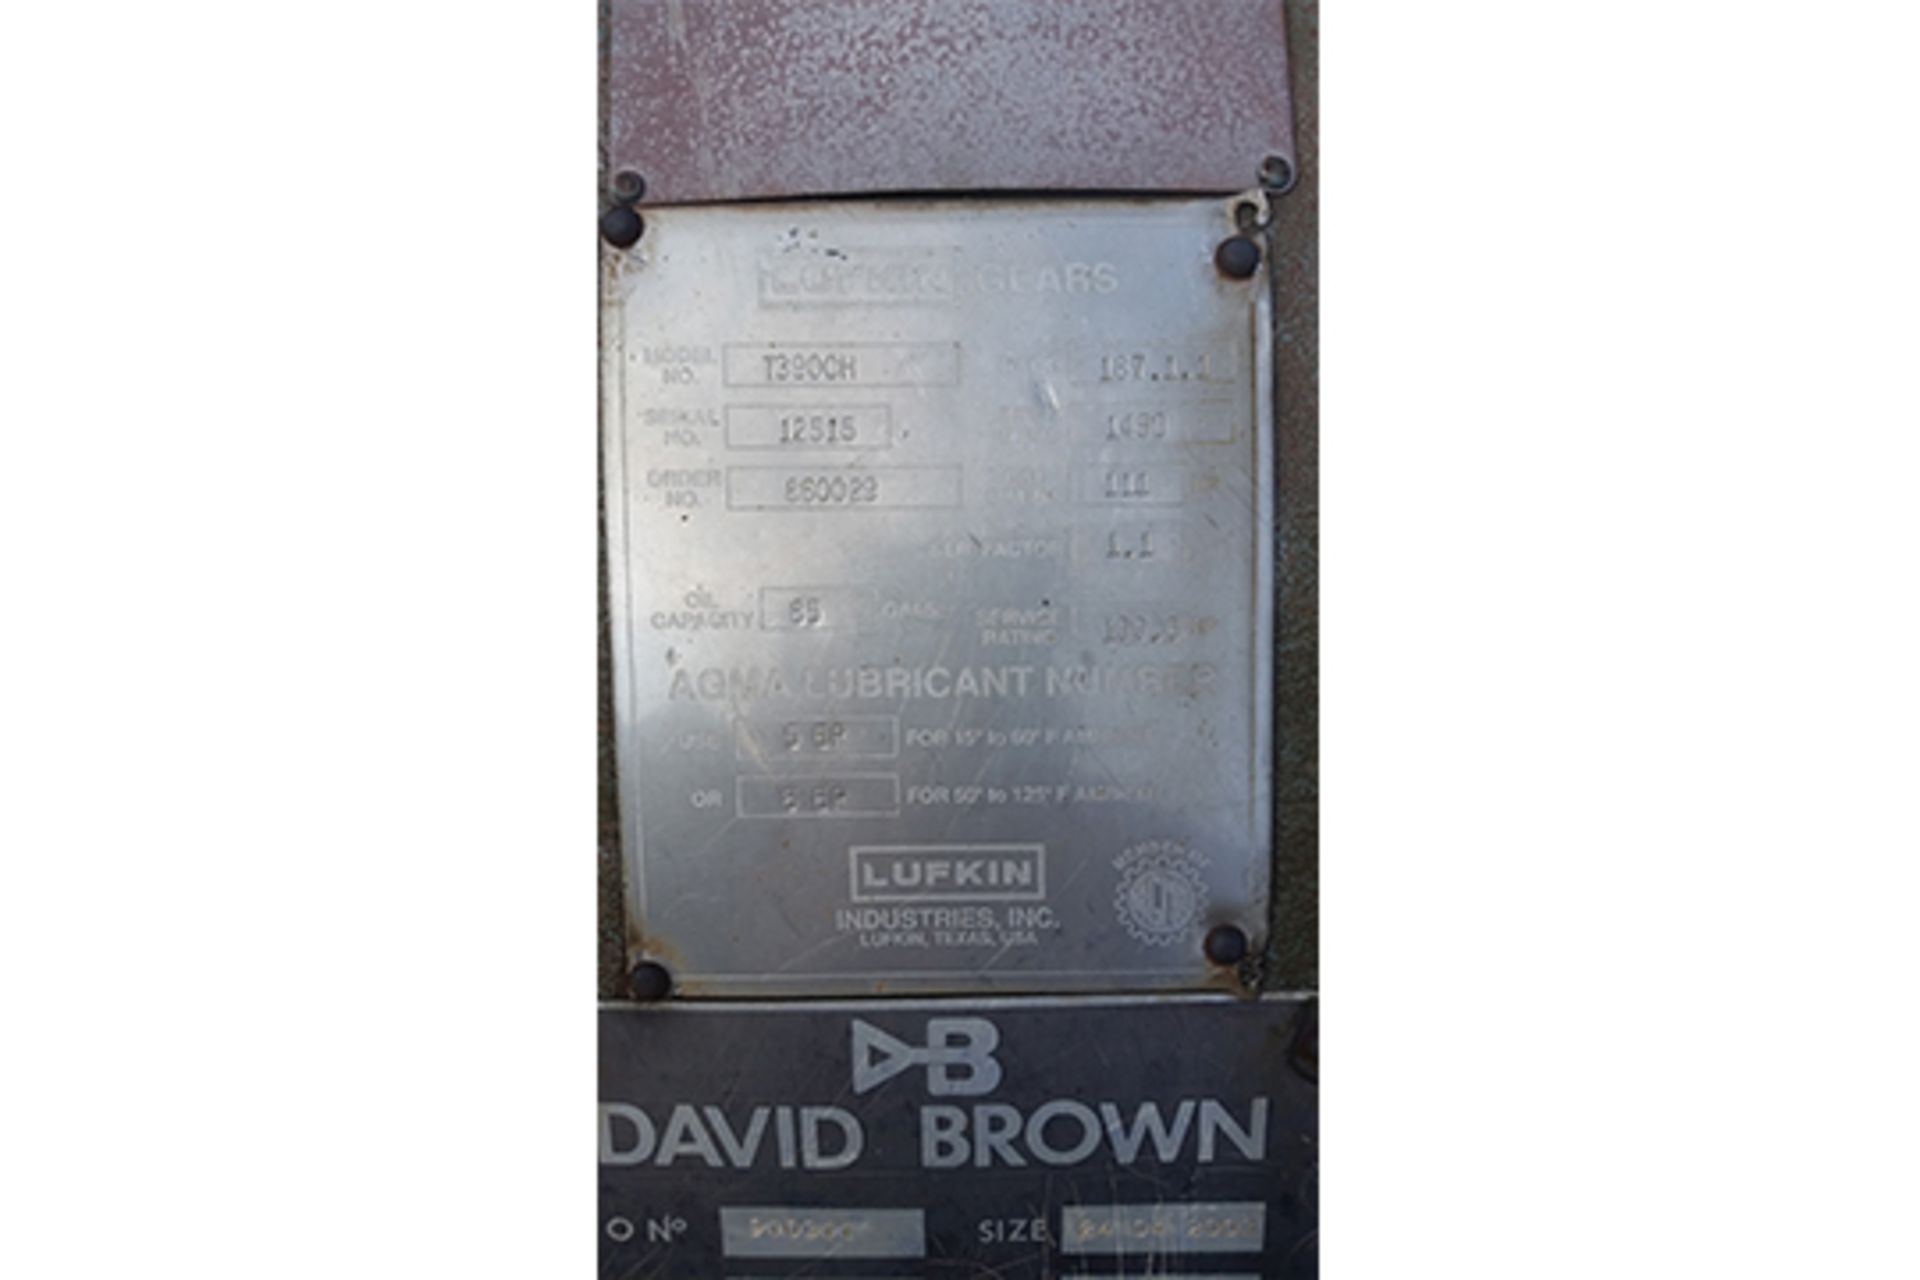 75 kW Mill drive Lufkin c/w David Brown gearbox - Image 2 of 2